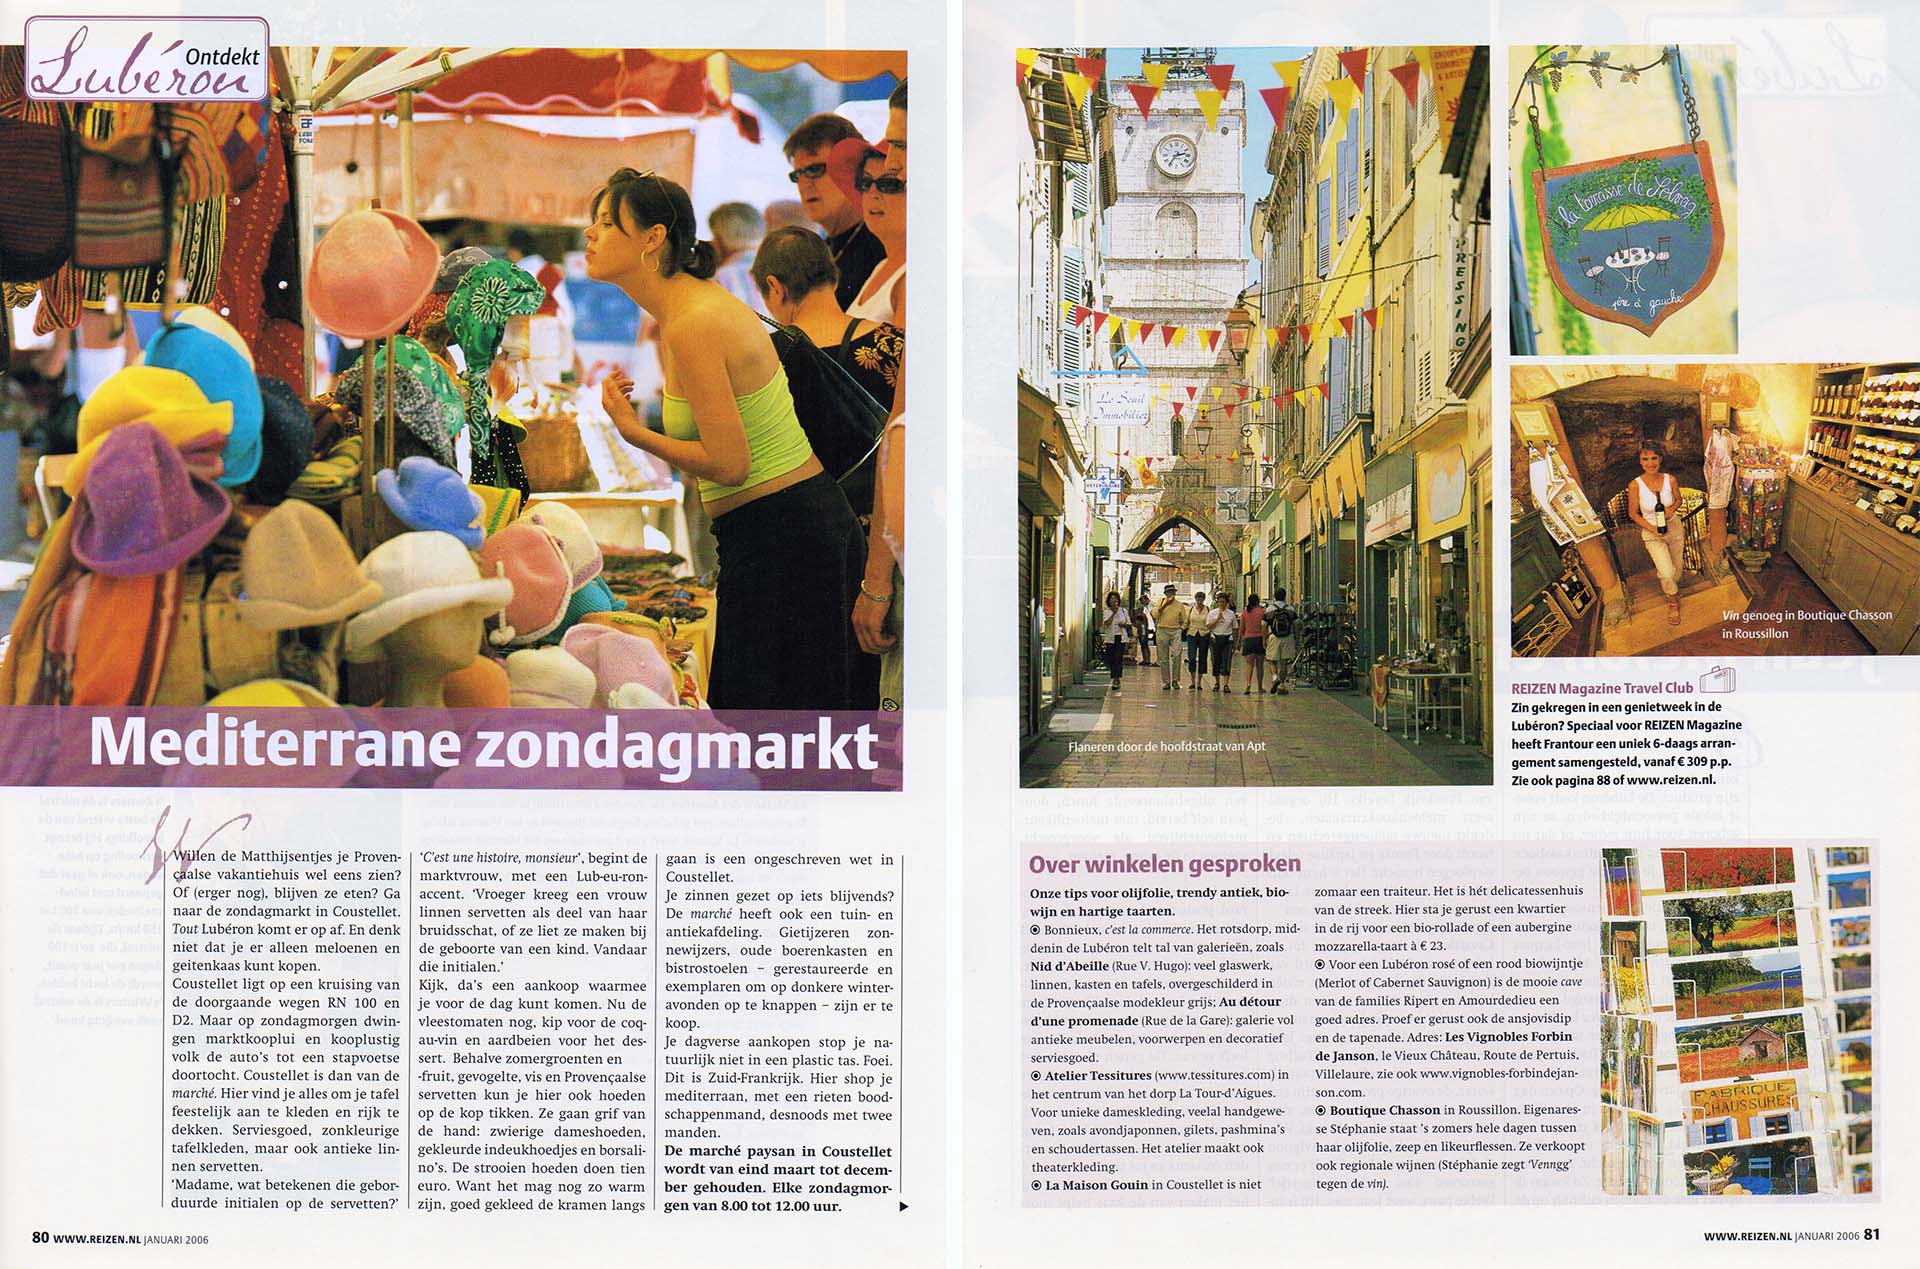 Twee pagina's uit publicatie Lubéron in ANWB Reizen magazine.